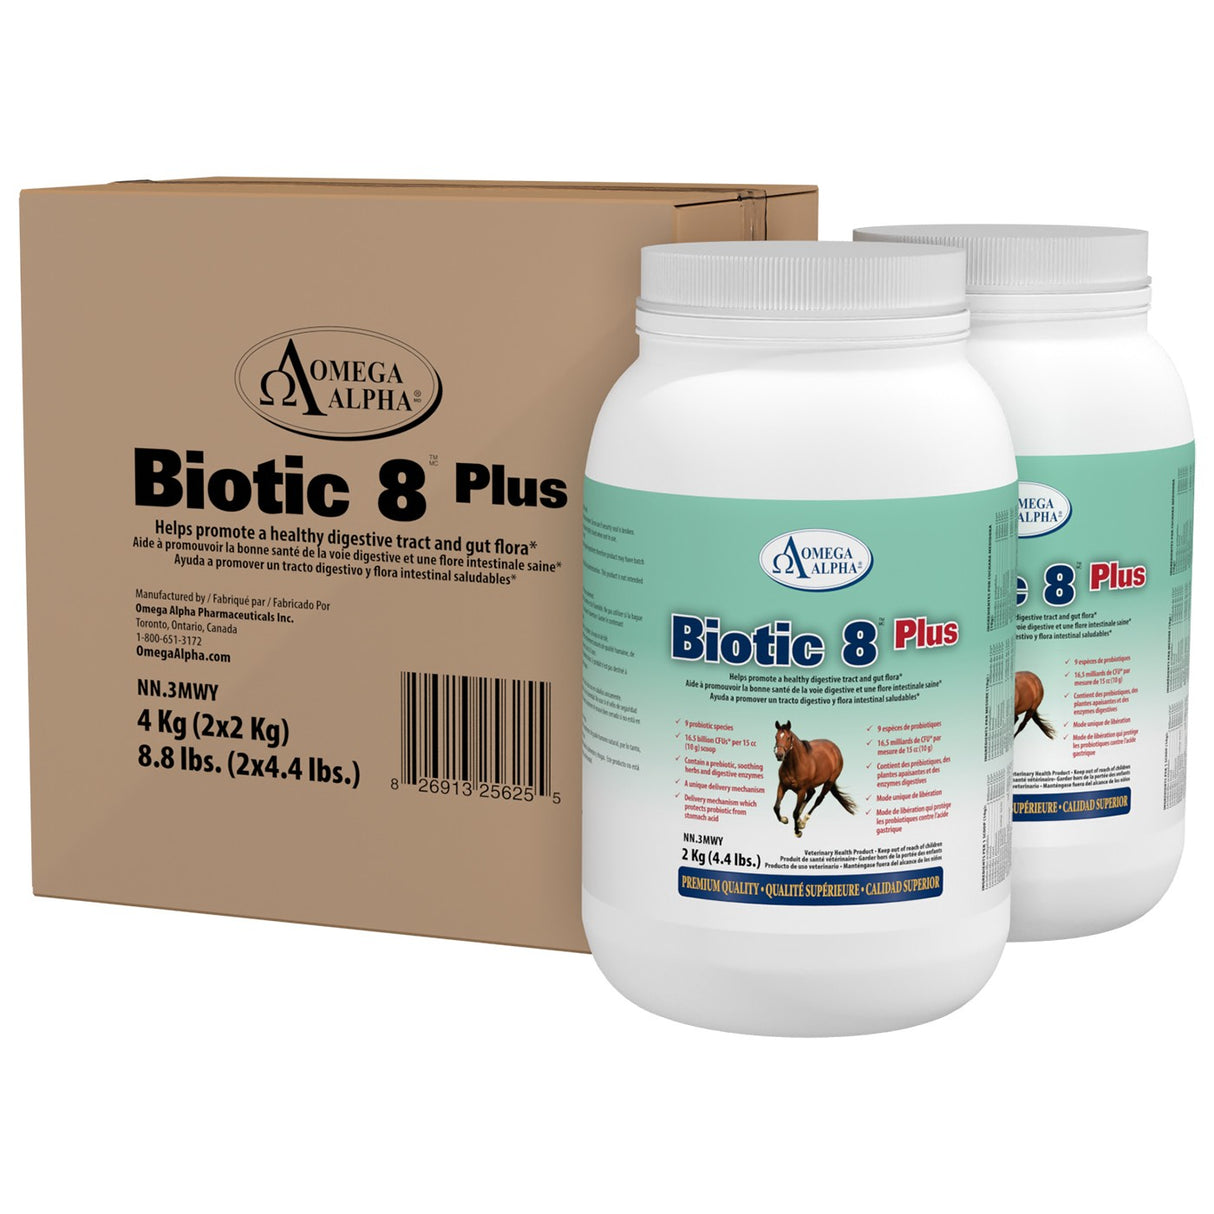 Omega Alpha Biotic 8 Plus 2 kg - Lot de 2